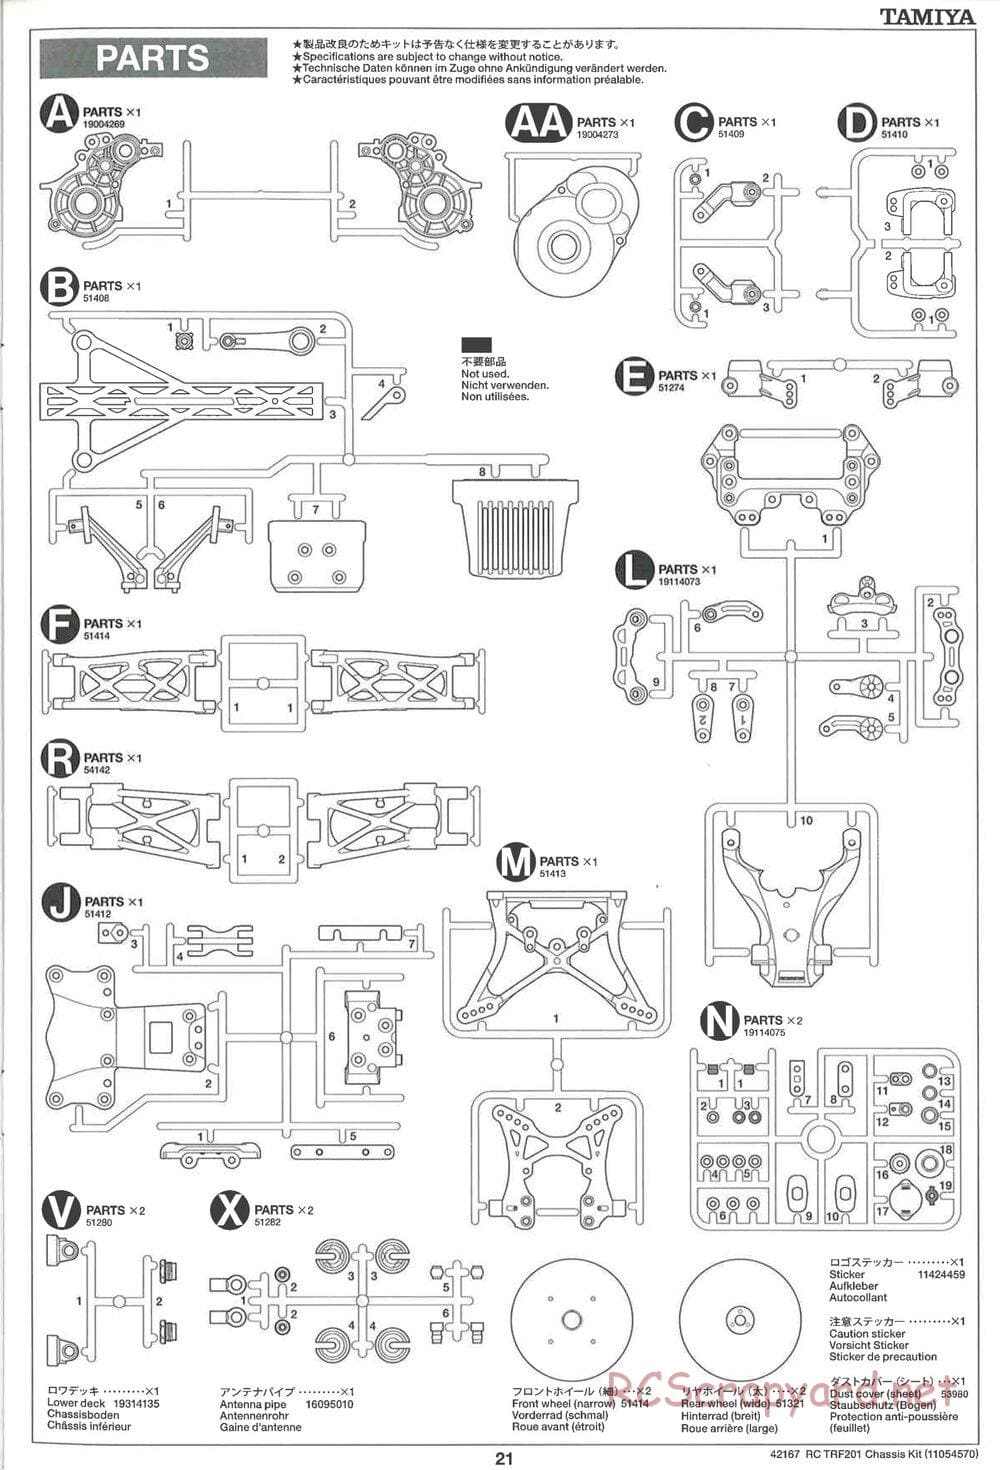 Tamiya - TRF201 Chassis - Manual - Page 21